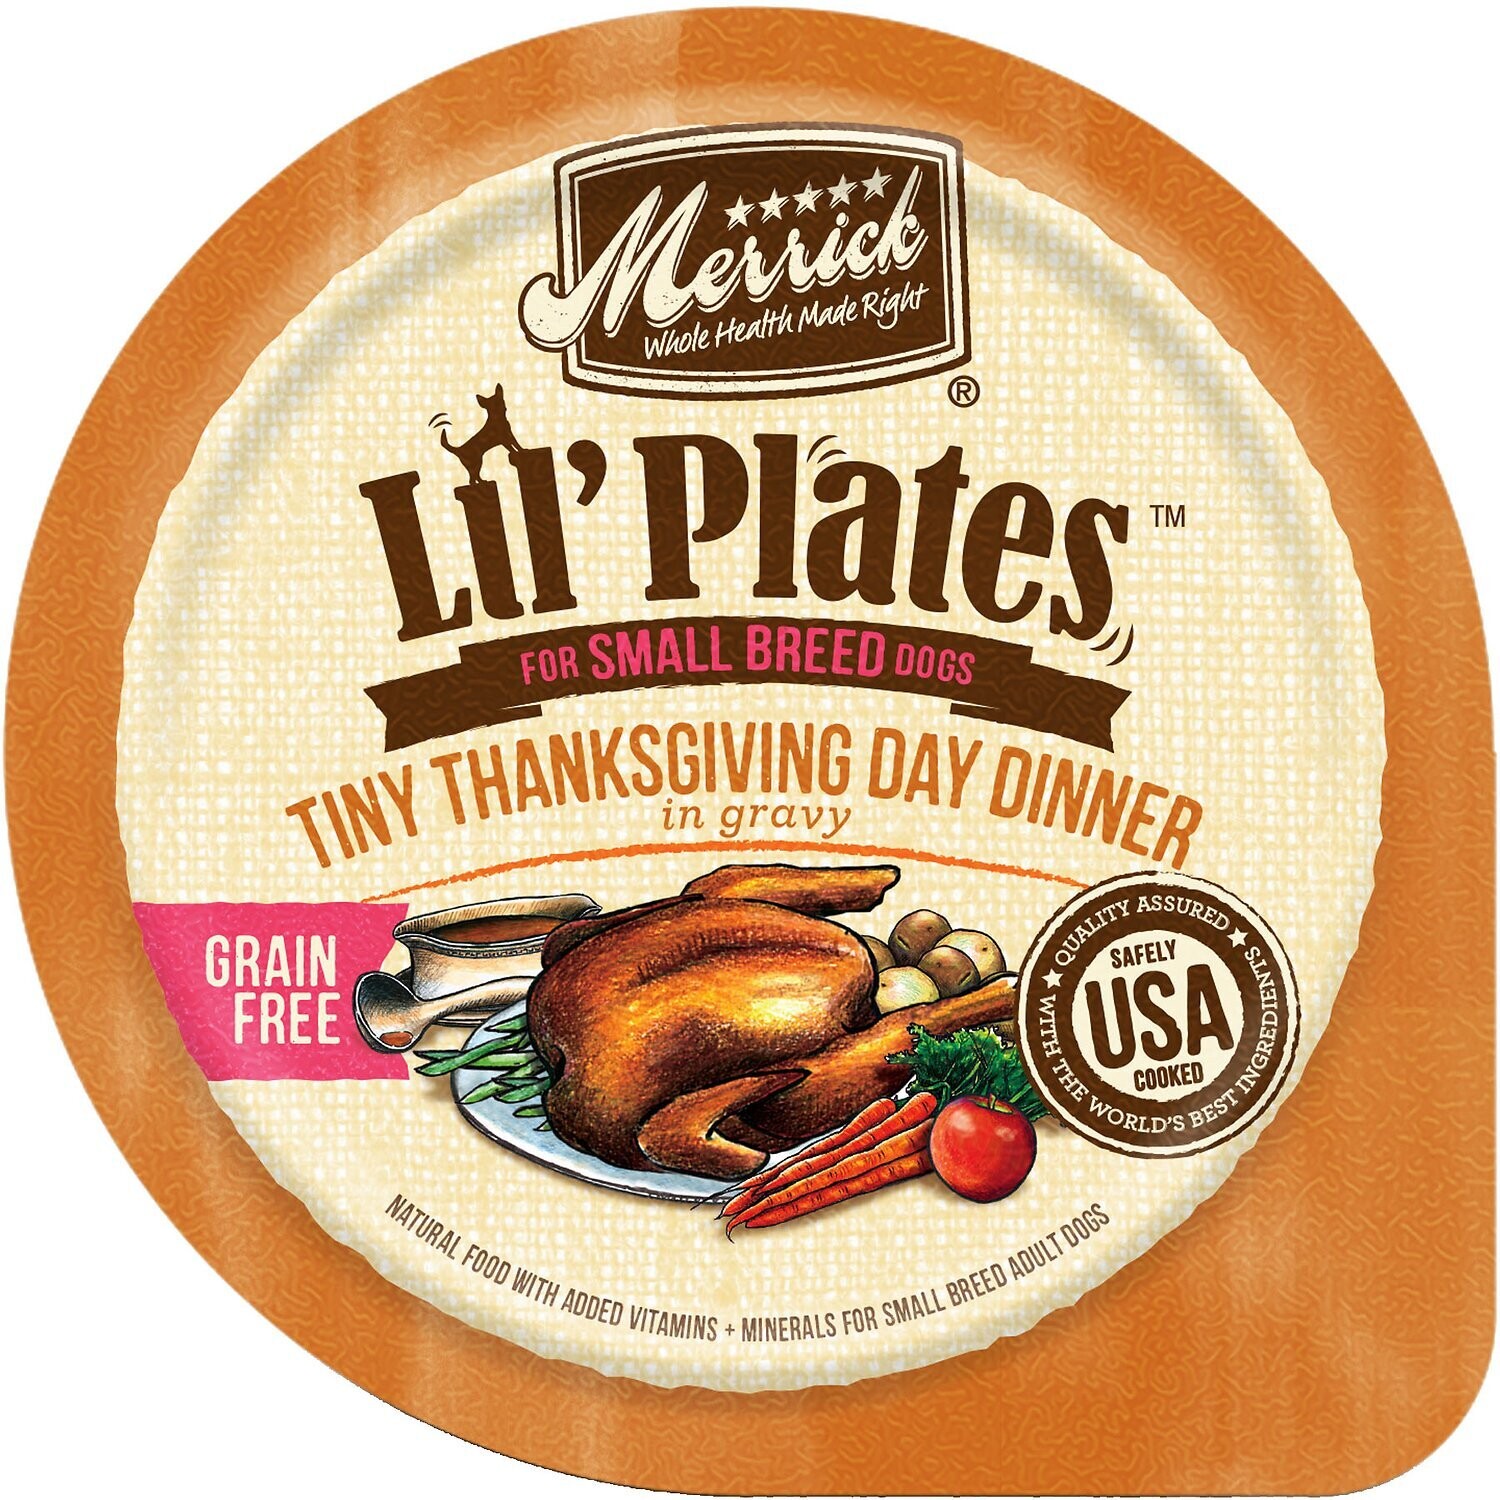 Merrick Lil' Plates Tiny Thanksgiving Dinner cup 3.5oz 12/case